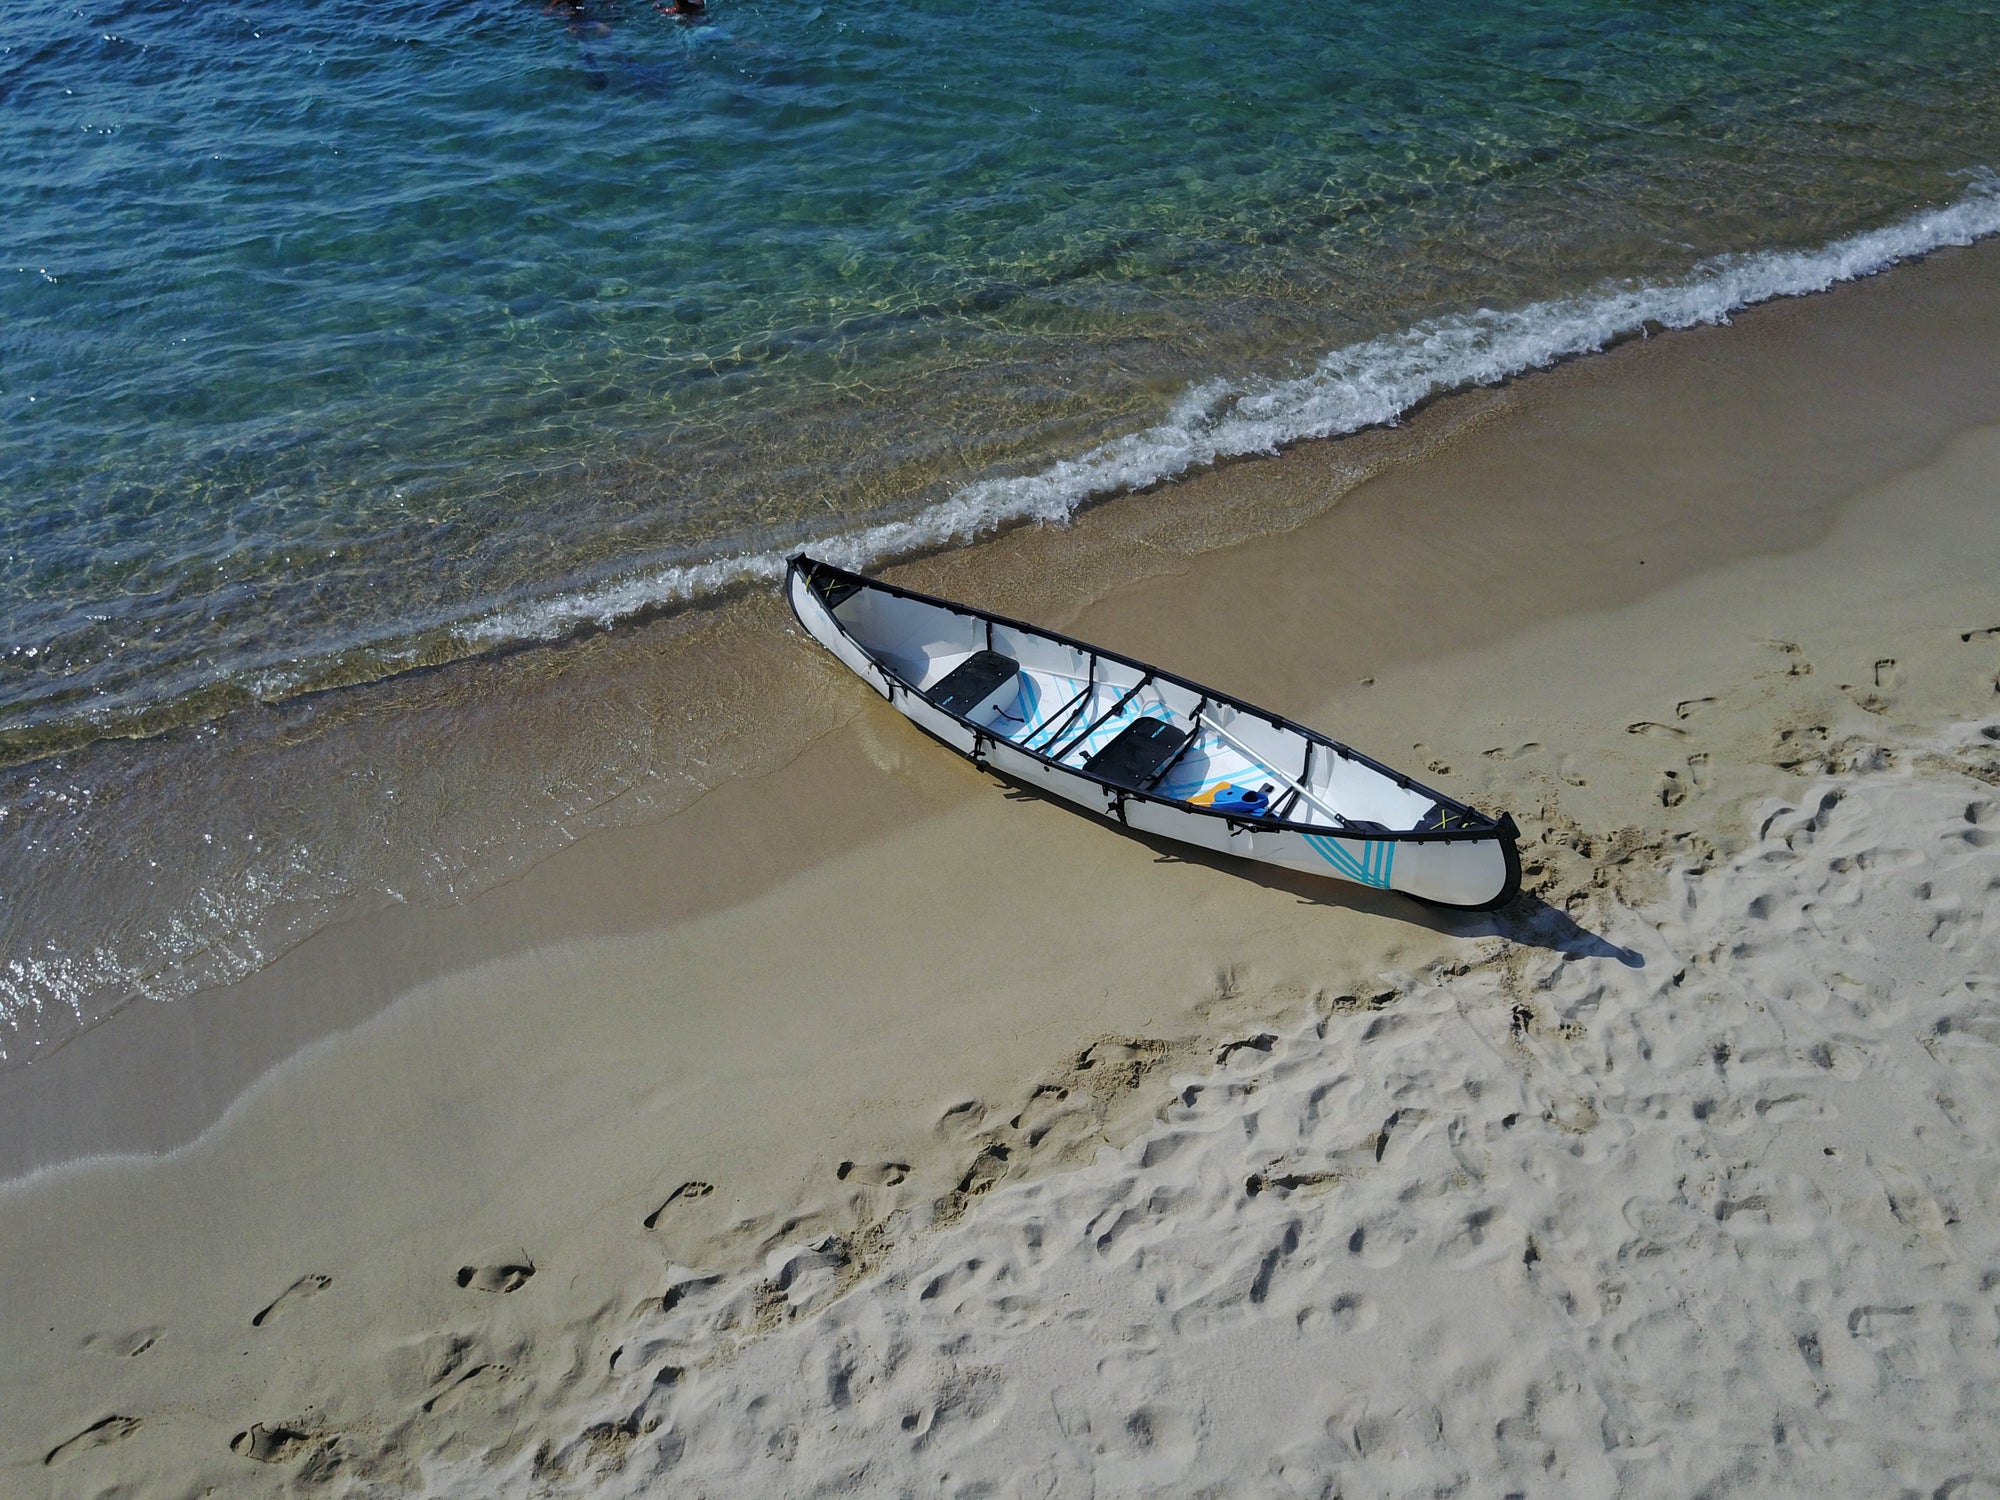 mycanoe duo 2 person canoe on beach aerial view